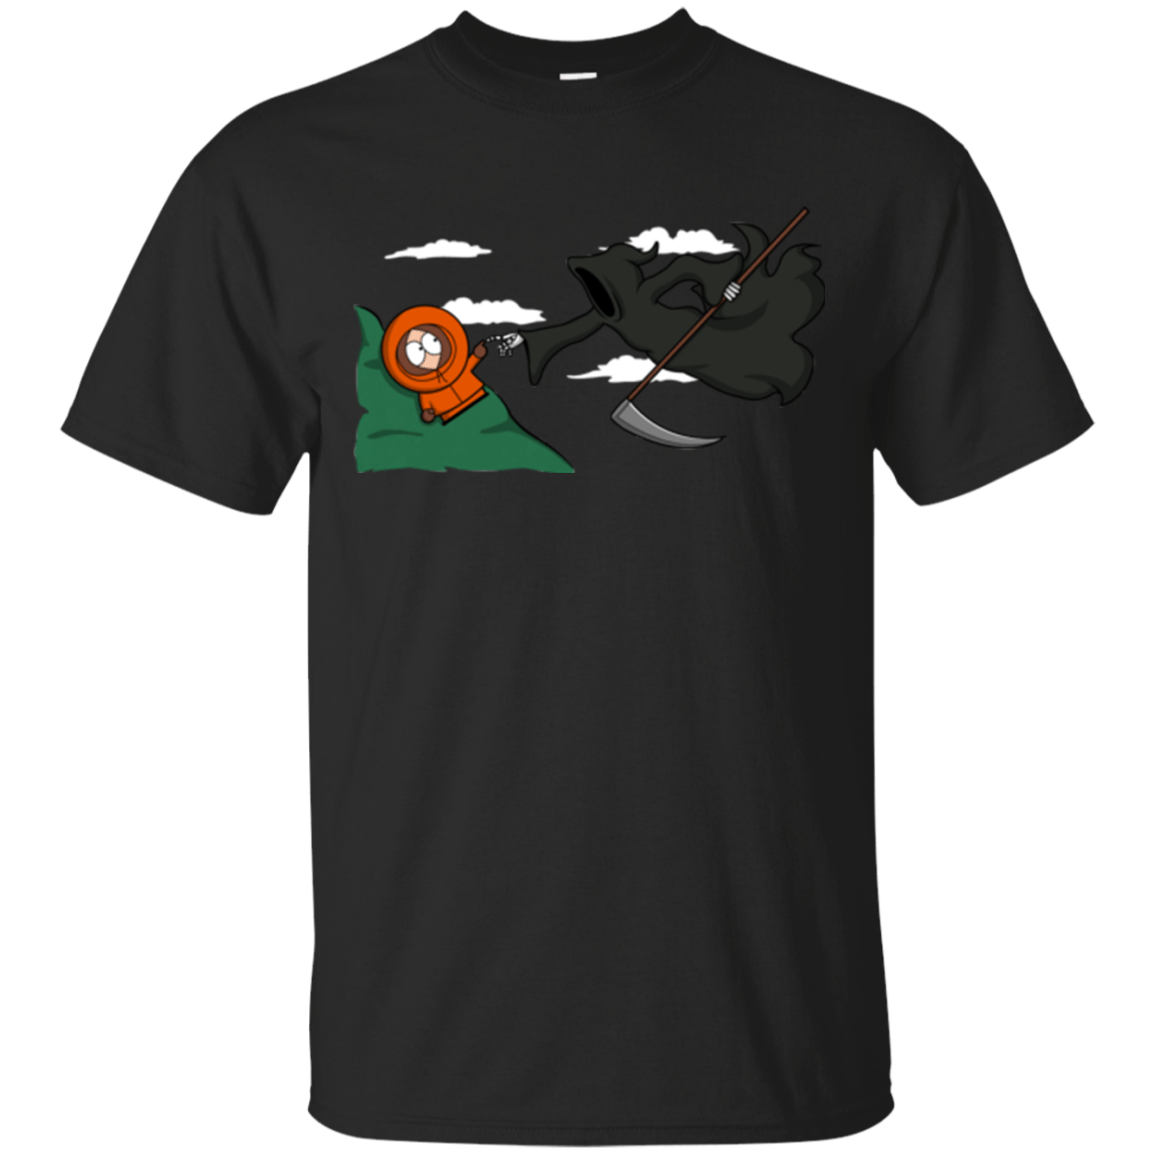 The Extinction T-Shirt